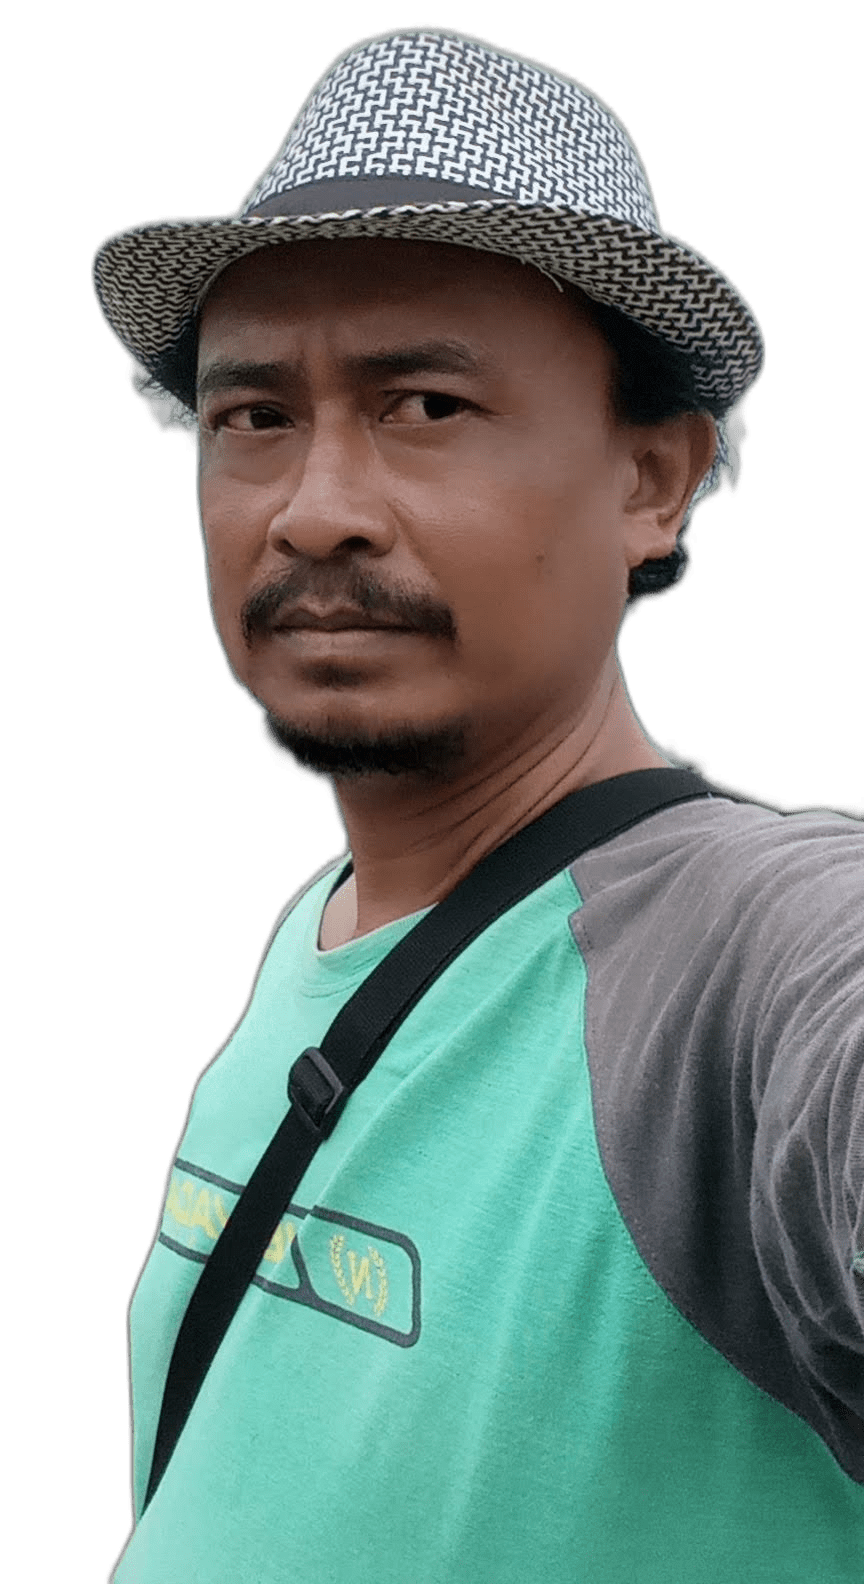 Ngurah Widiada Bali Guide and Driver